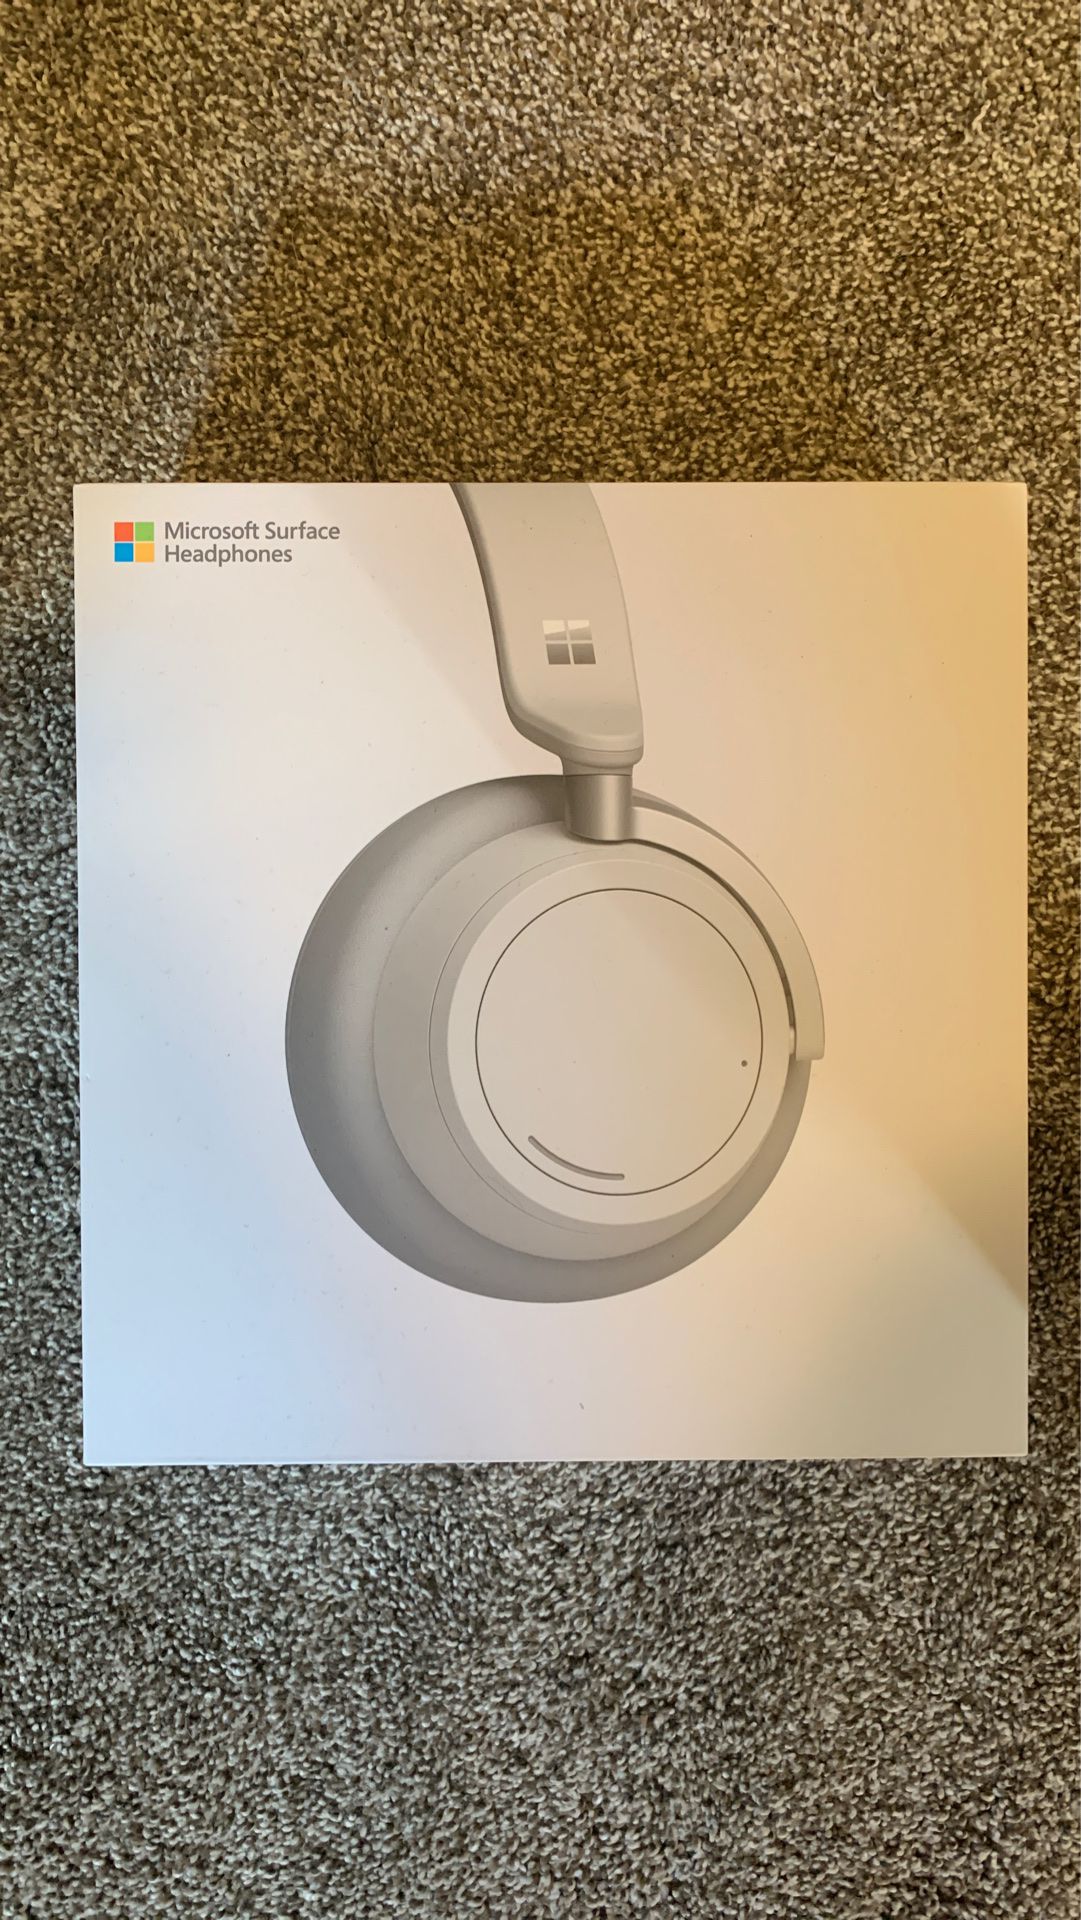 Microsoft surface Headphones